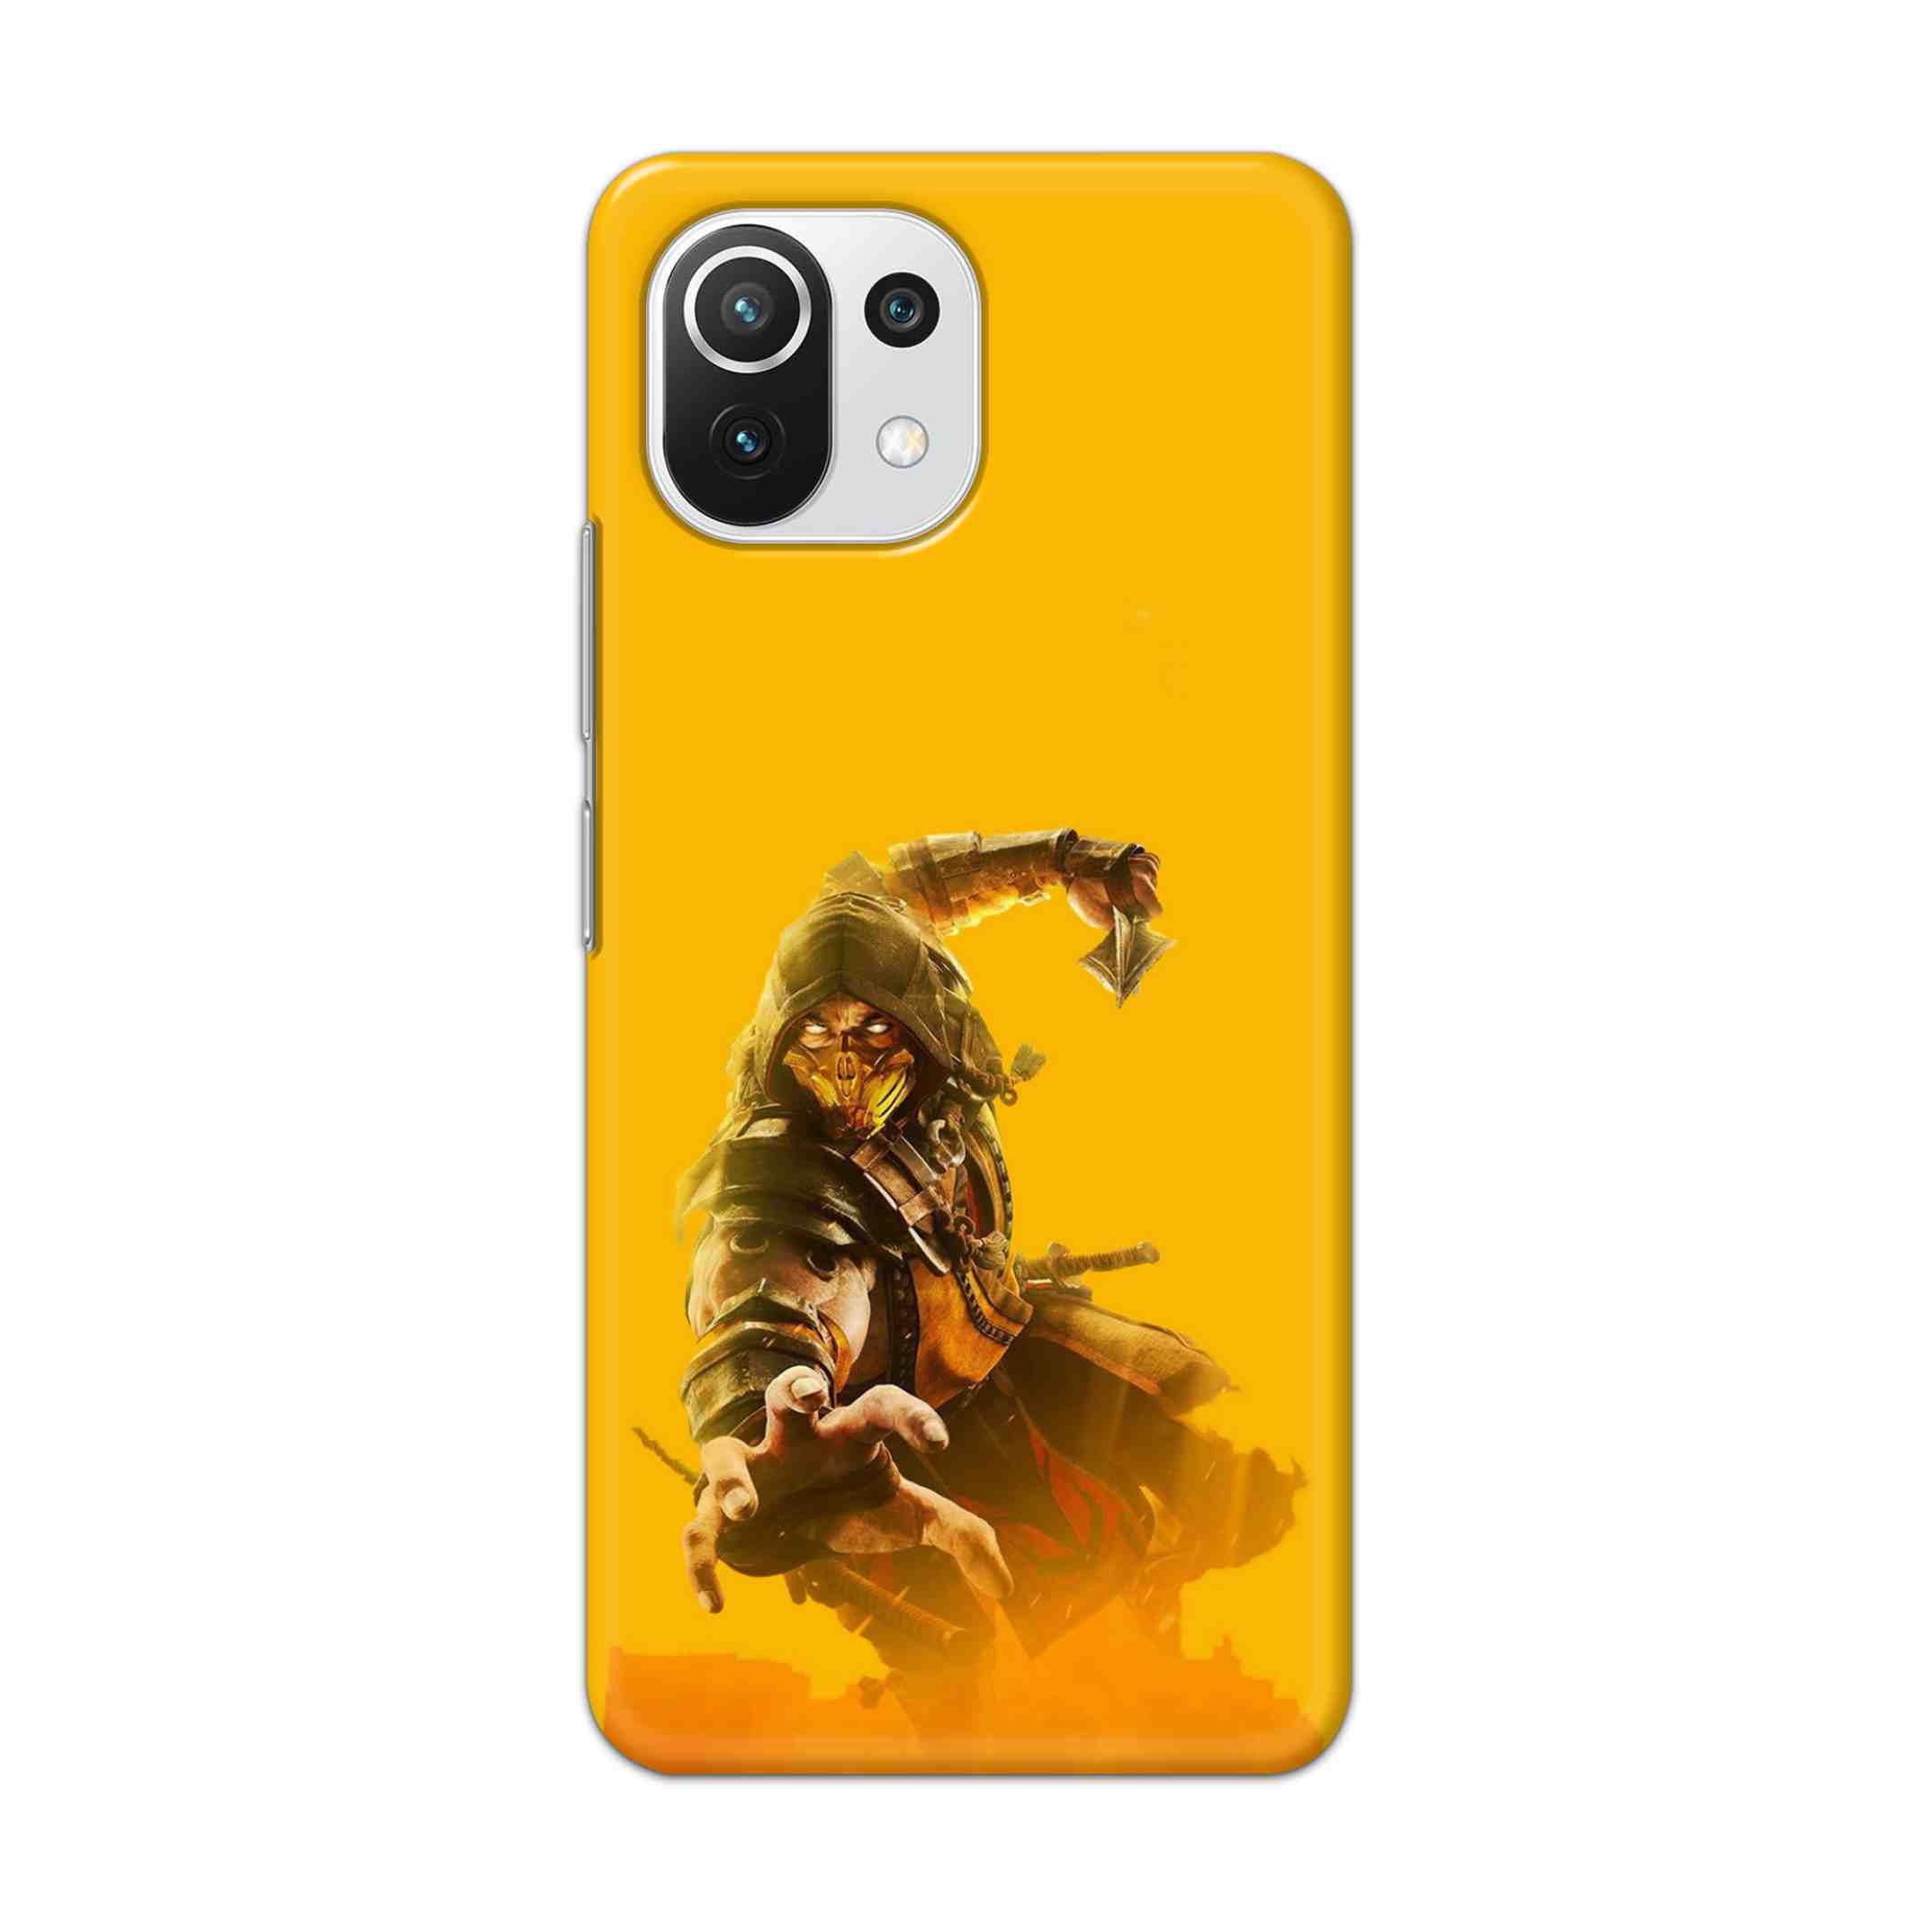 Buy Mortal Kombat Hard Back Mobile Phone Case Cover For Mi 11 Lite NE 5G Online